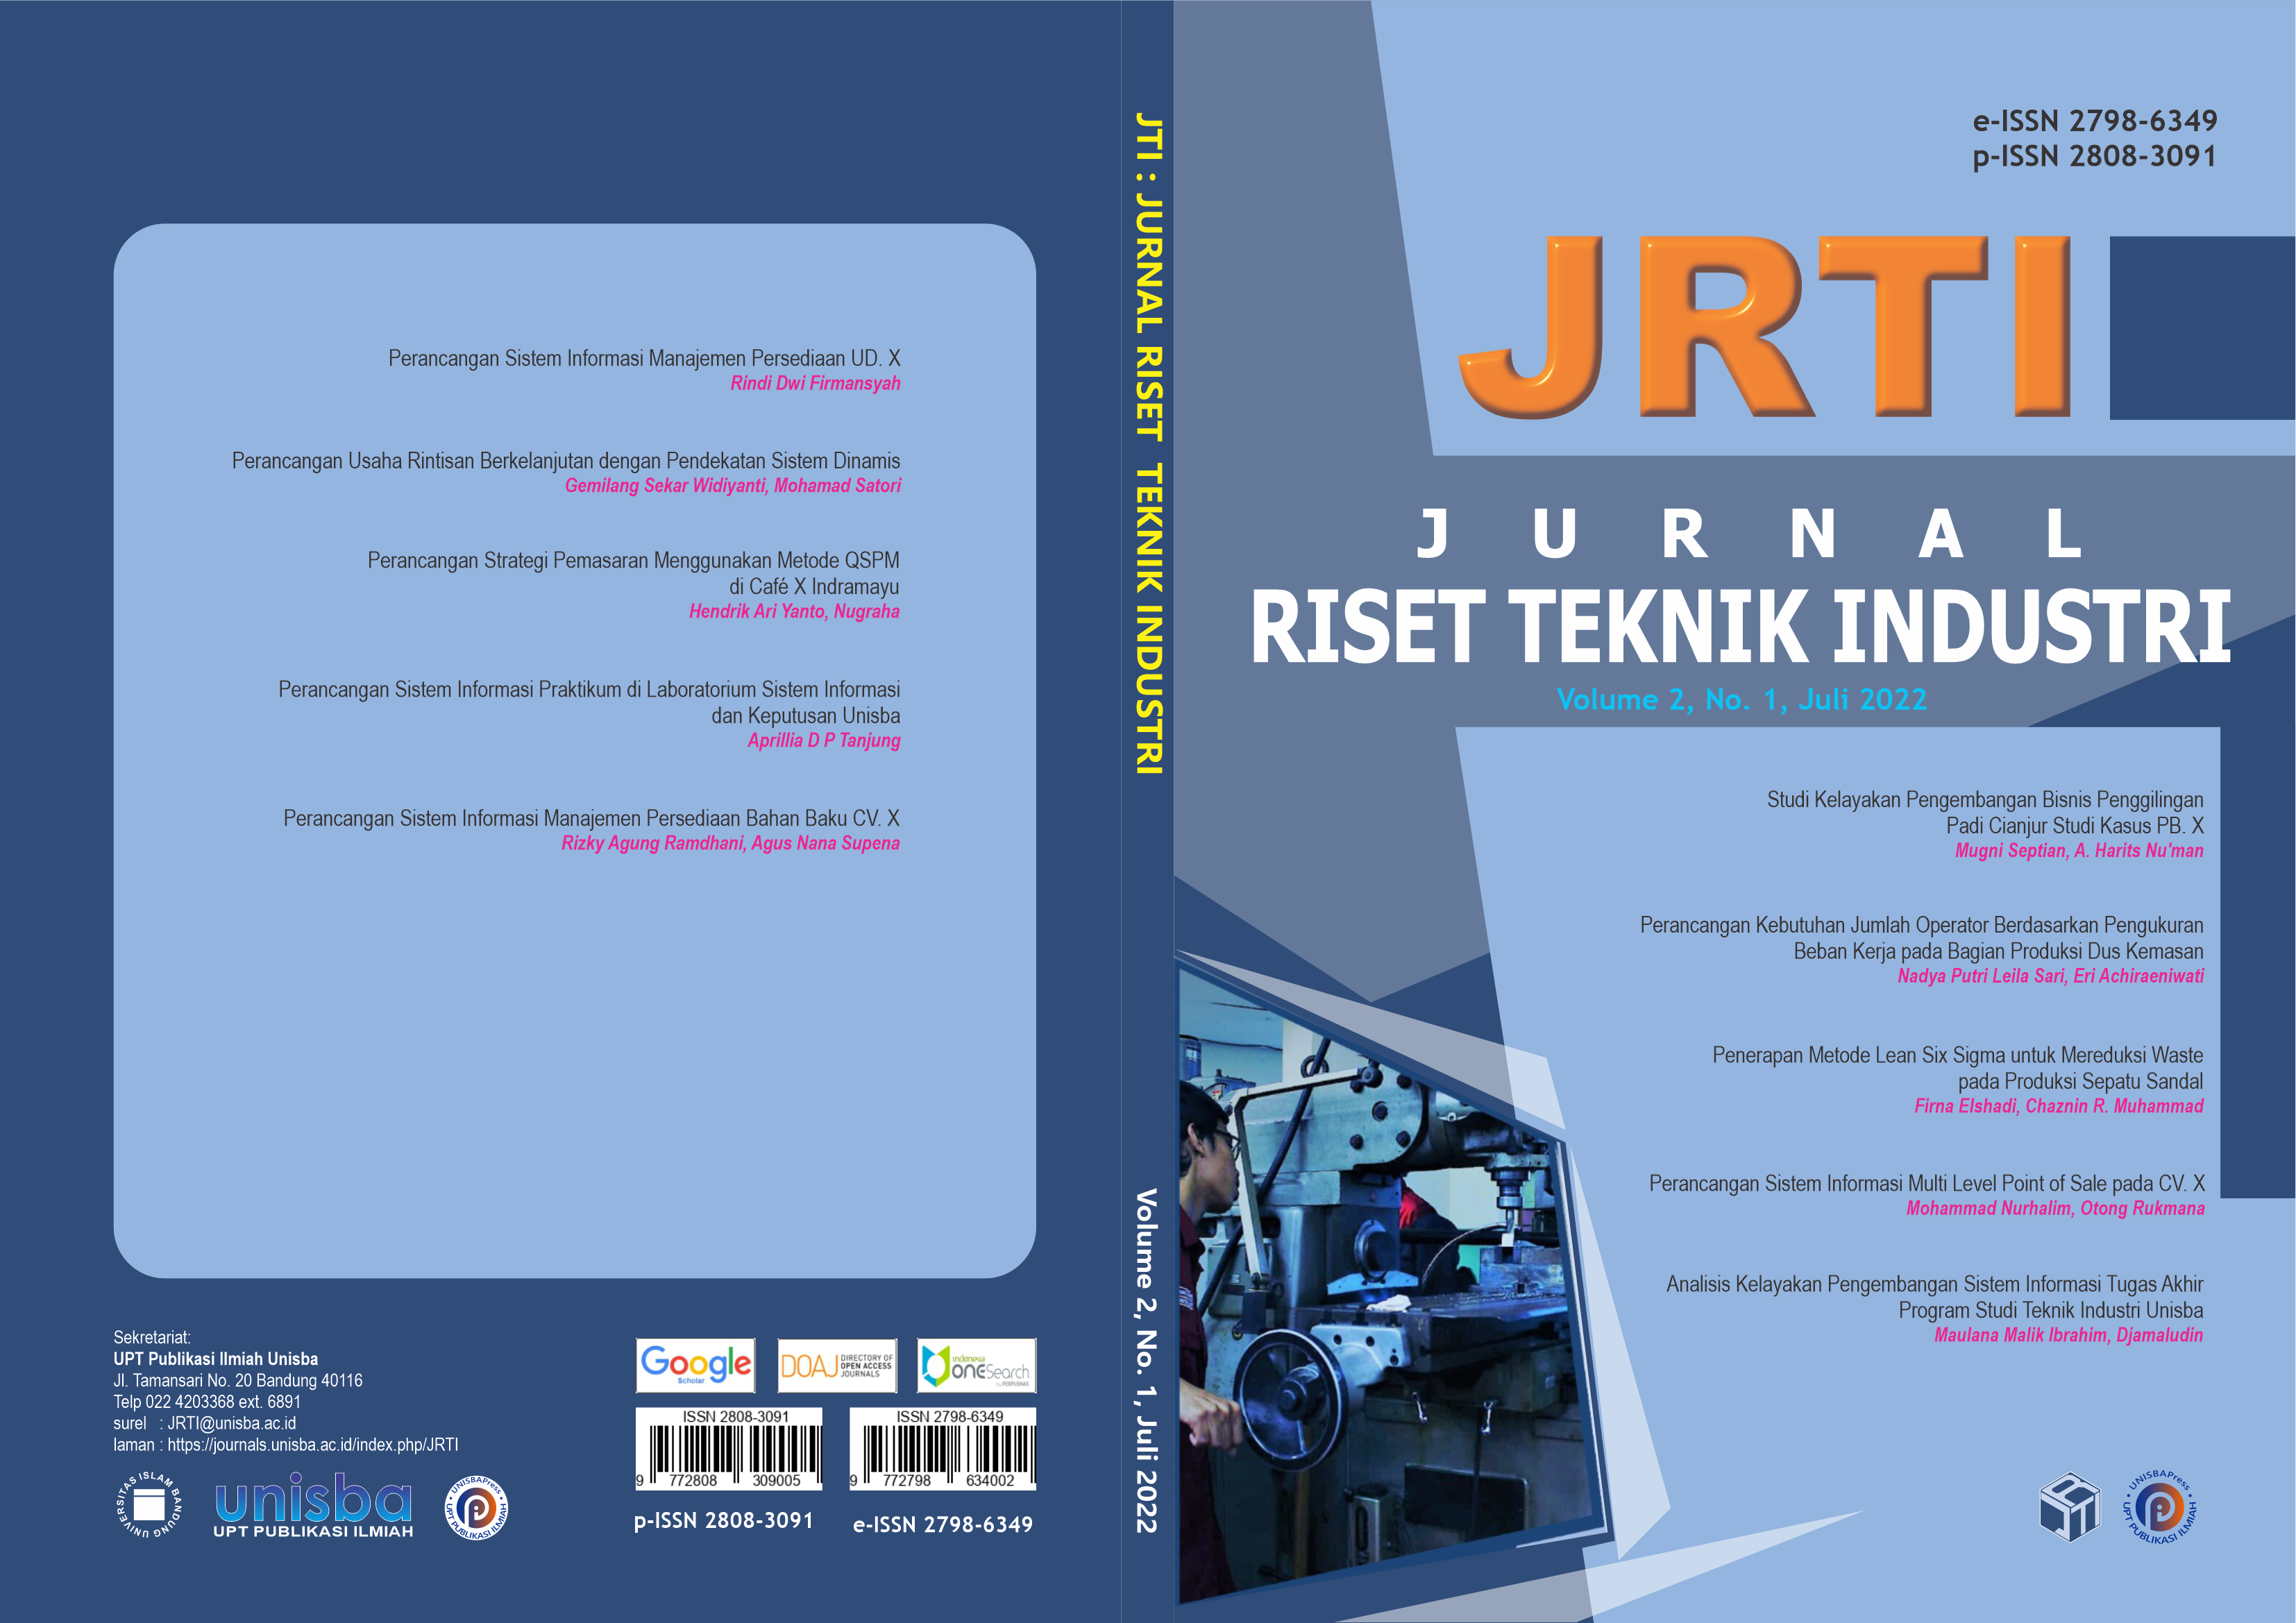 					View Volume 2, No. 1, Juli 2022, Jurnal Riset Teknik Industri (JRTI)
				